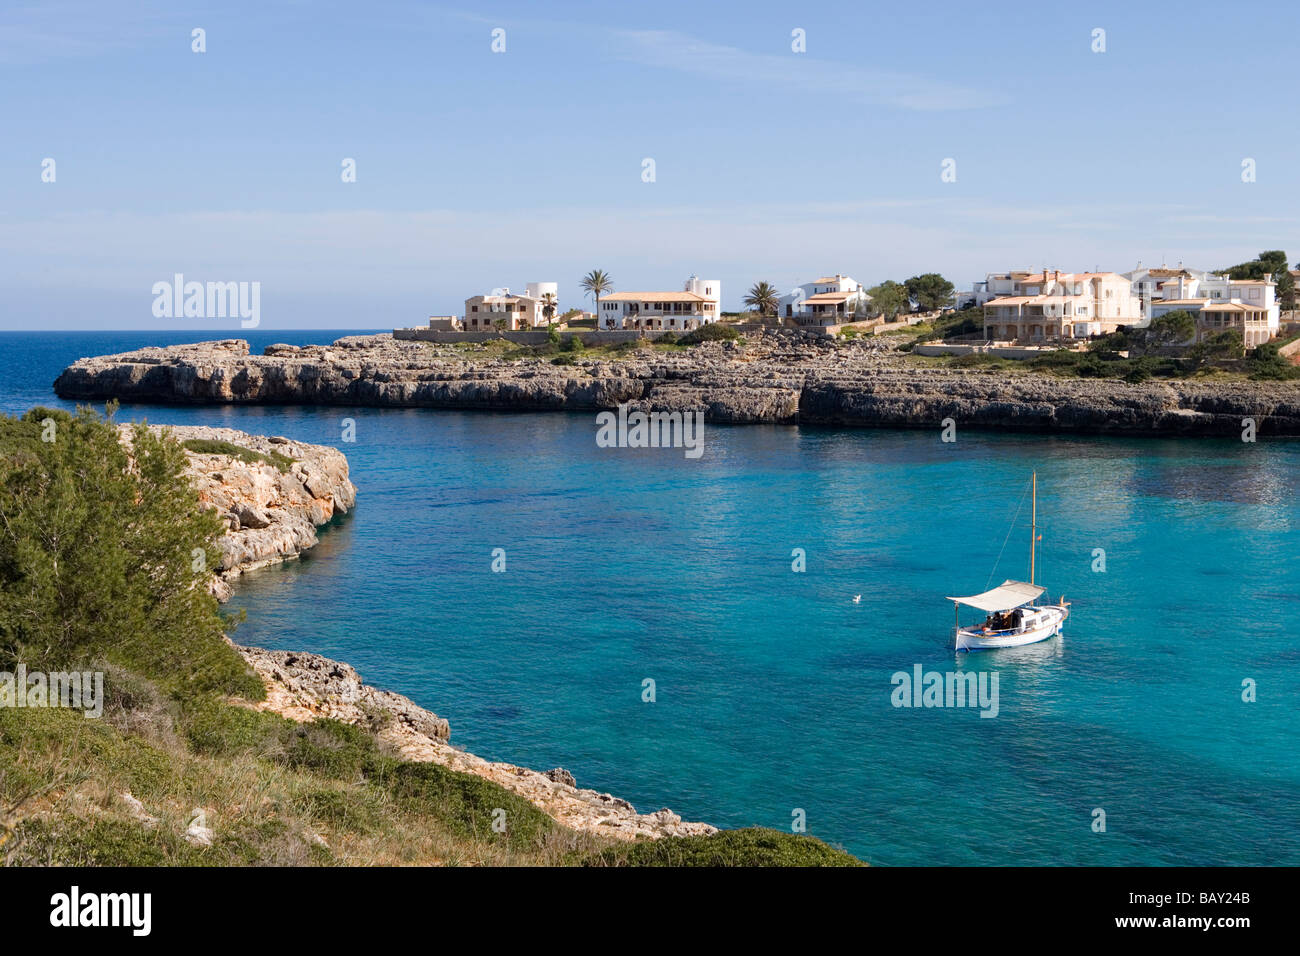 La pesca in barca a Cala Marcal Cove, Cala Marsal, Maiorca, isole Baleari, Spagna Foto Stock